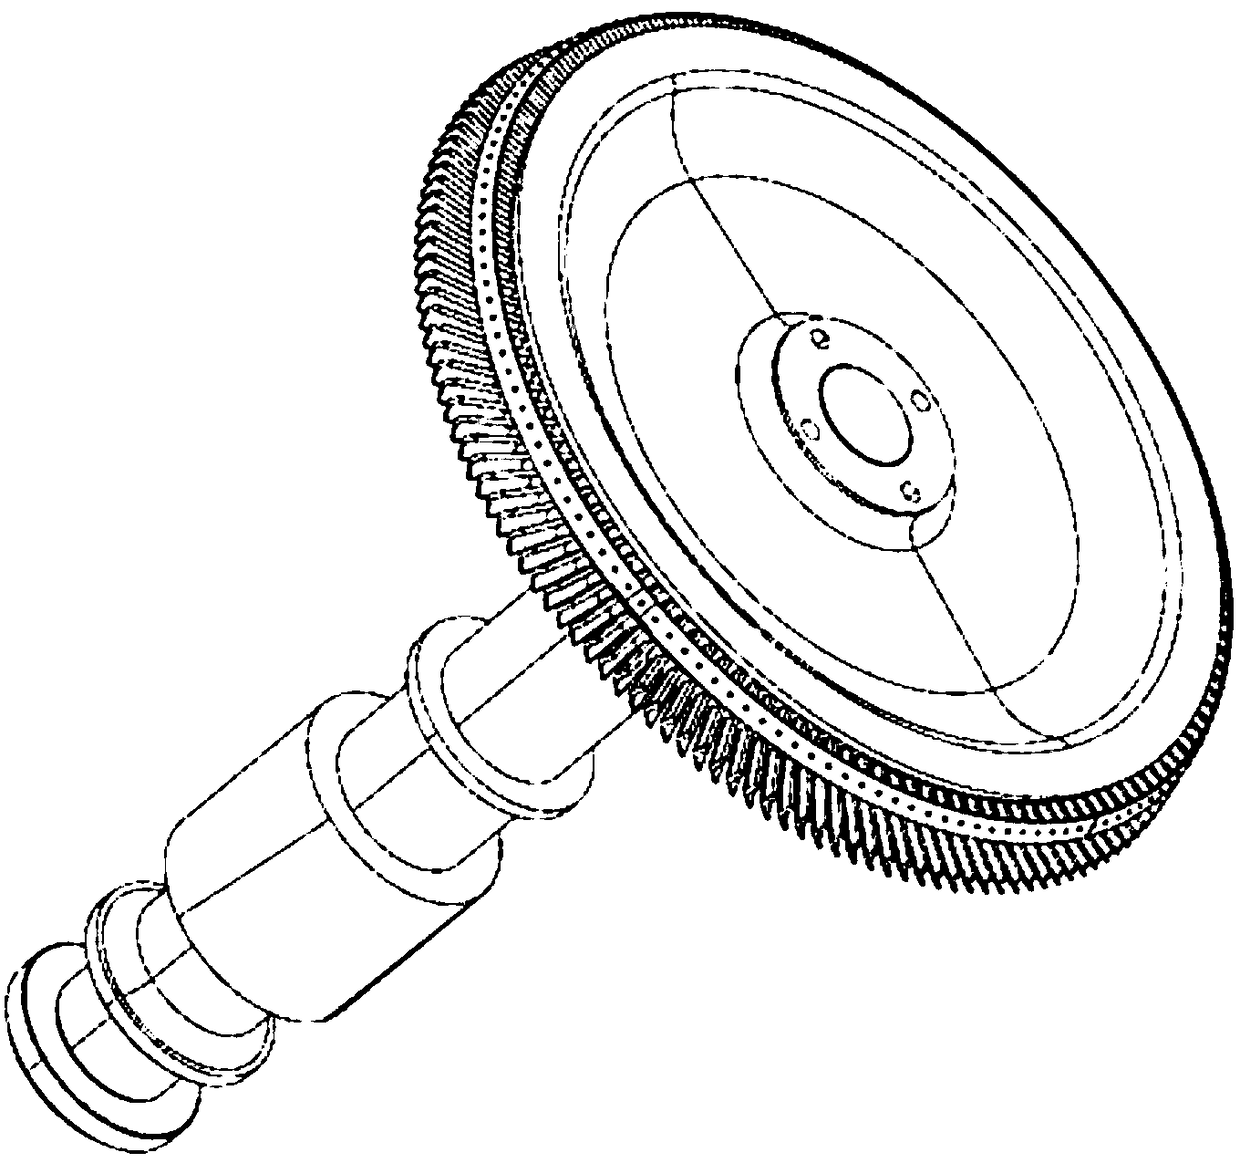 A design method of turbine high speed shaft